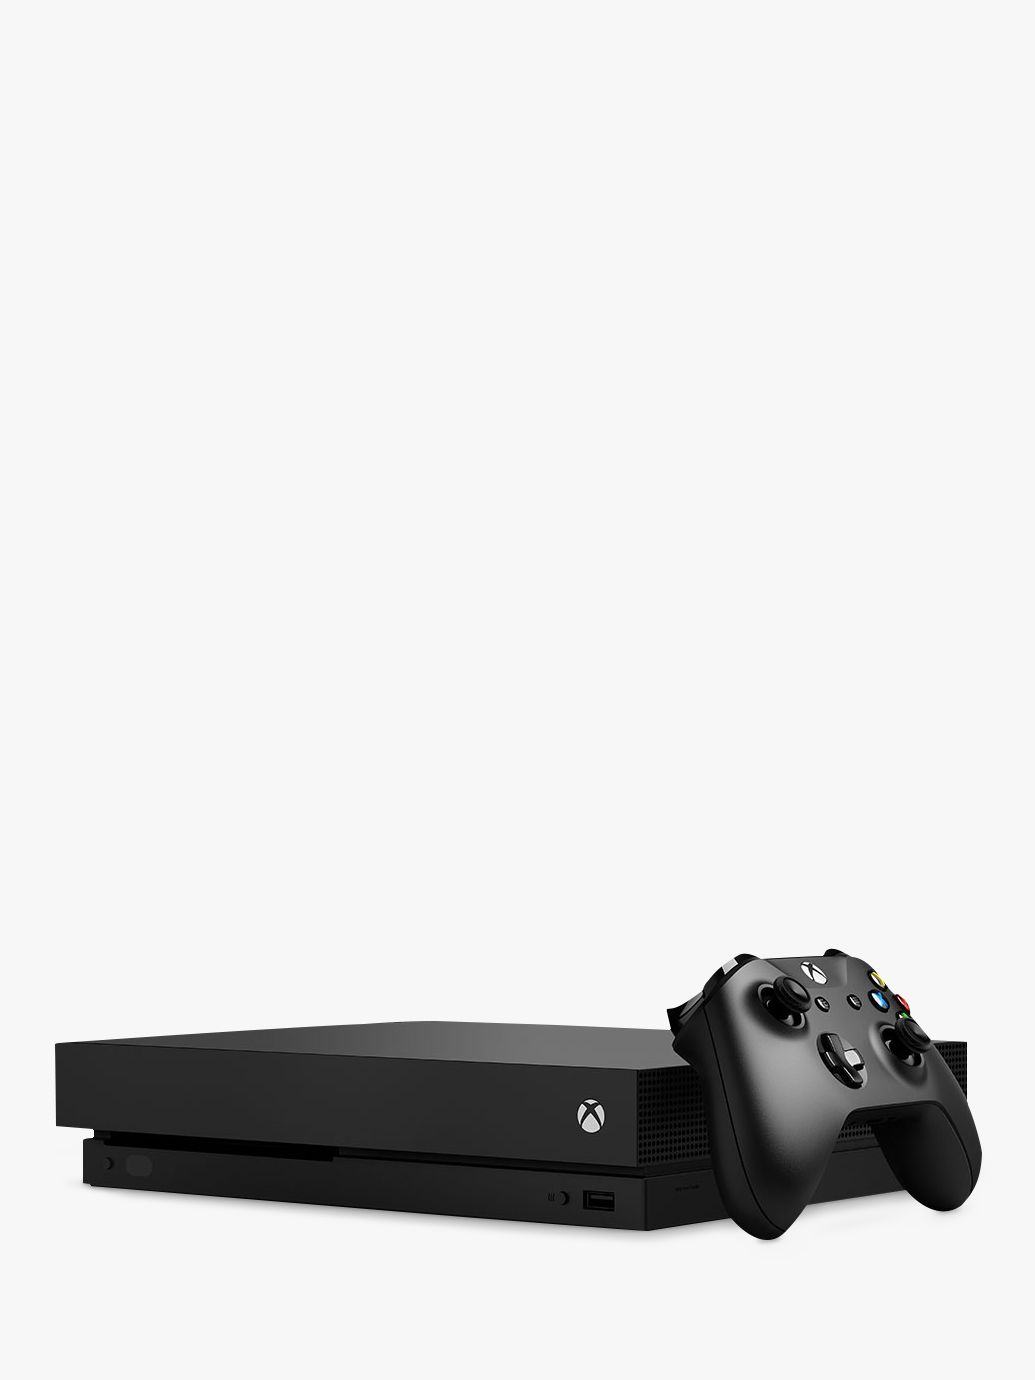 Microsoft Xbox One X 1tb Console With Wireless Controller : Xbox